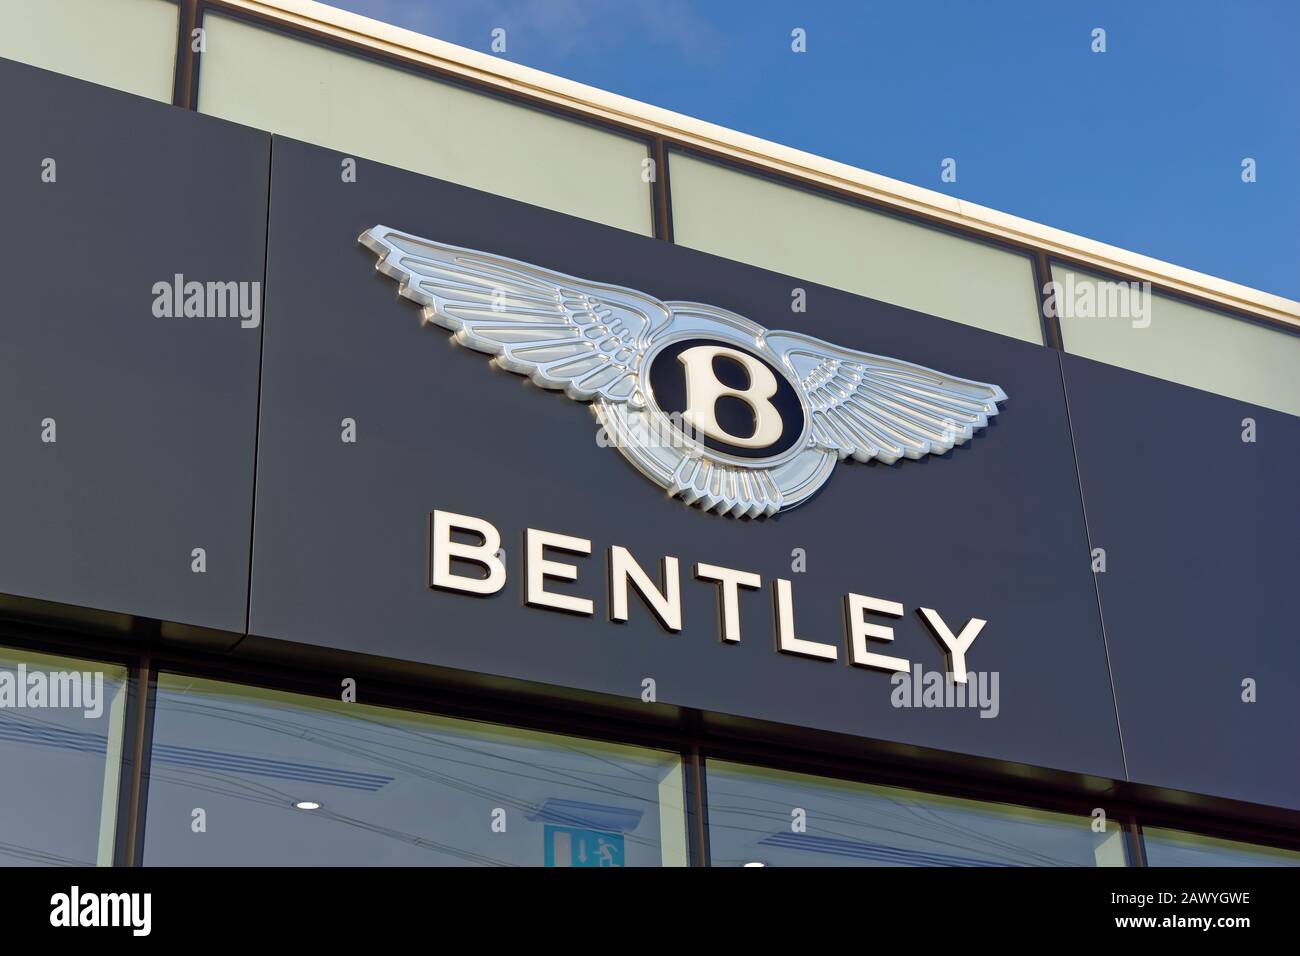 Bentley Car dealership corporate signage. Stock Photo